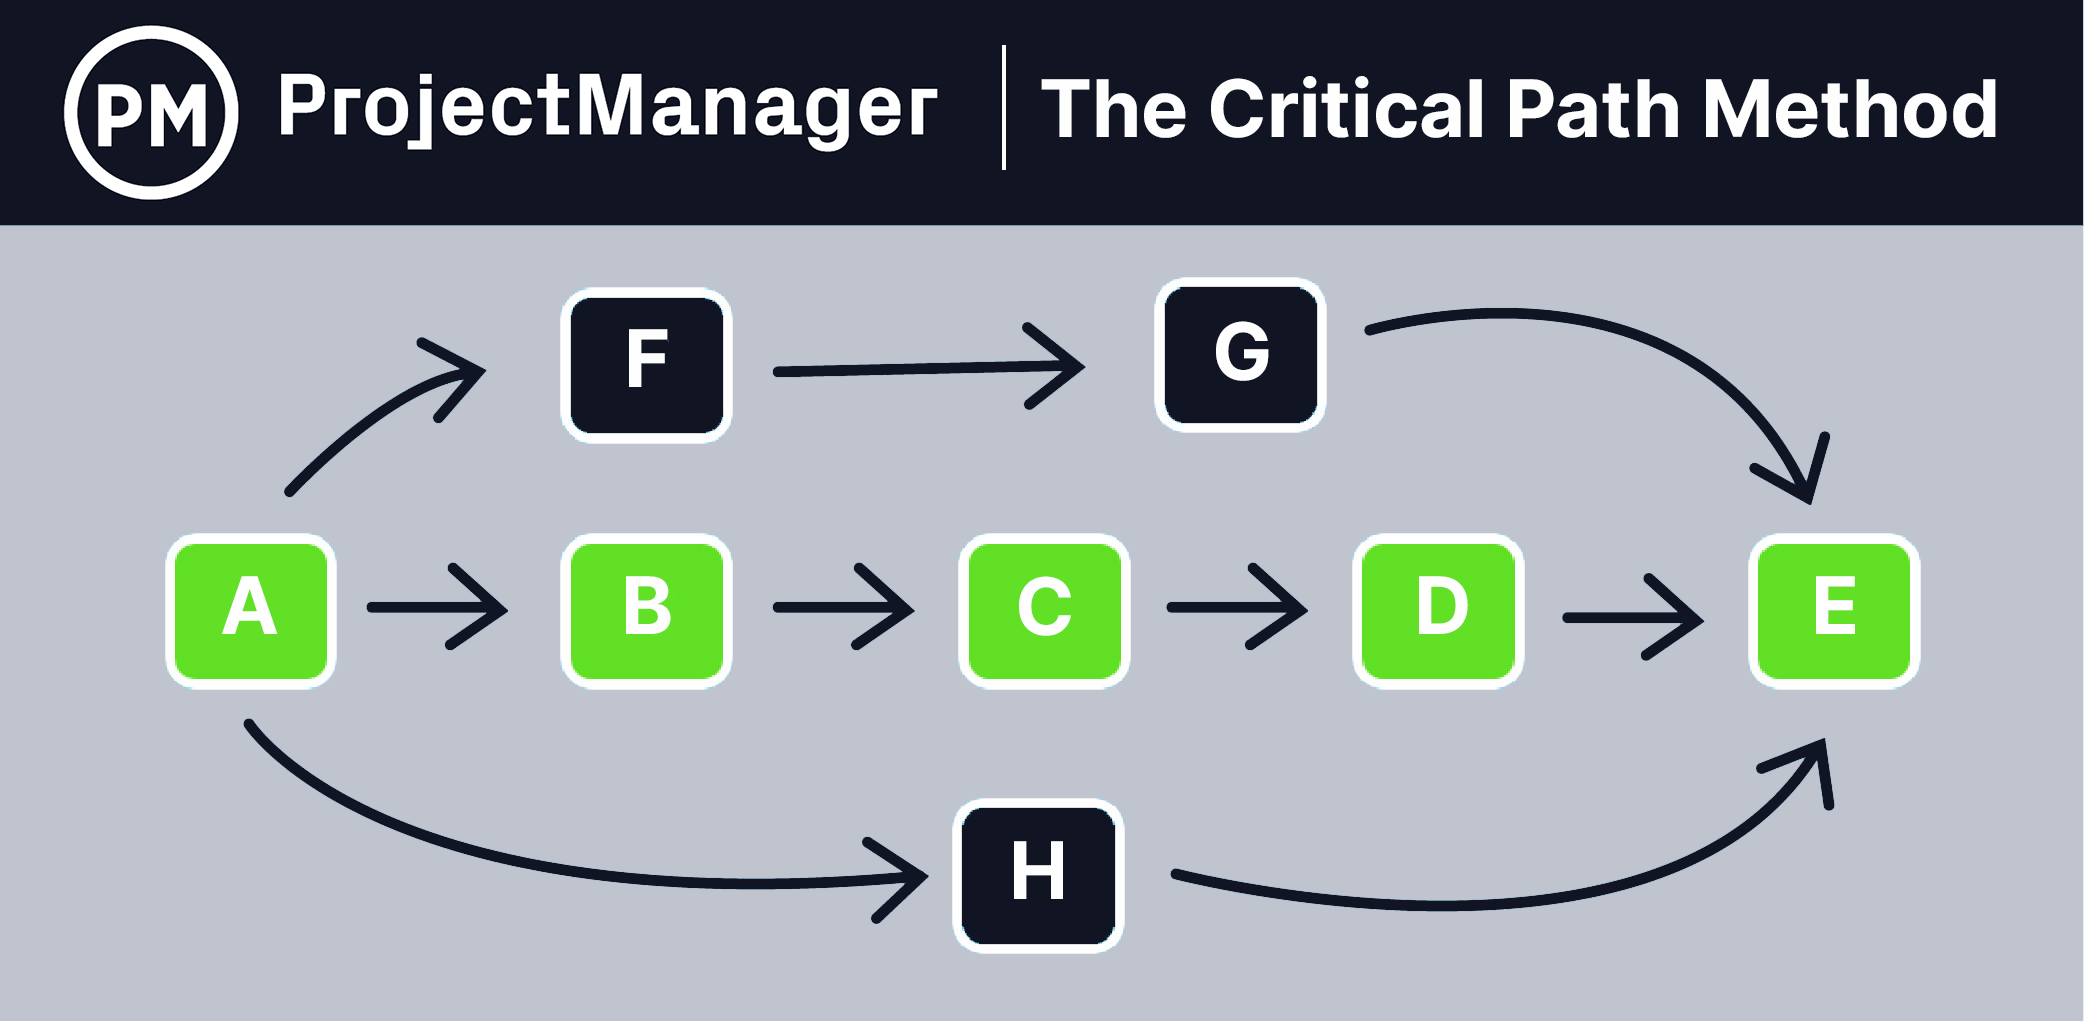 critical path diagram template